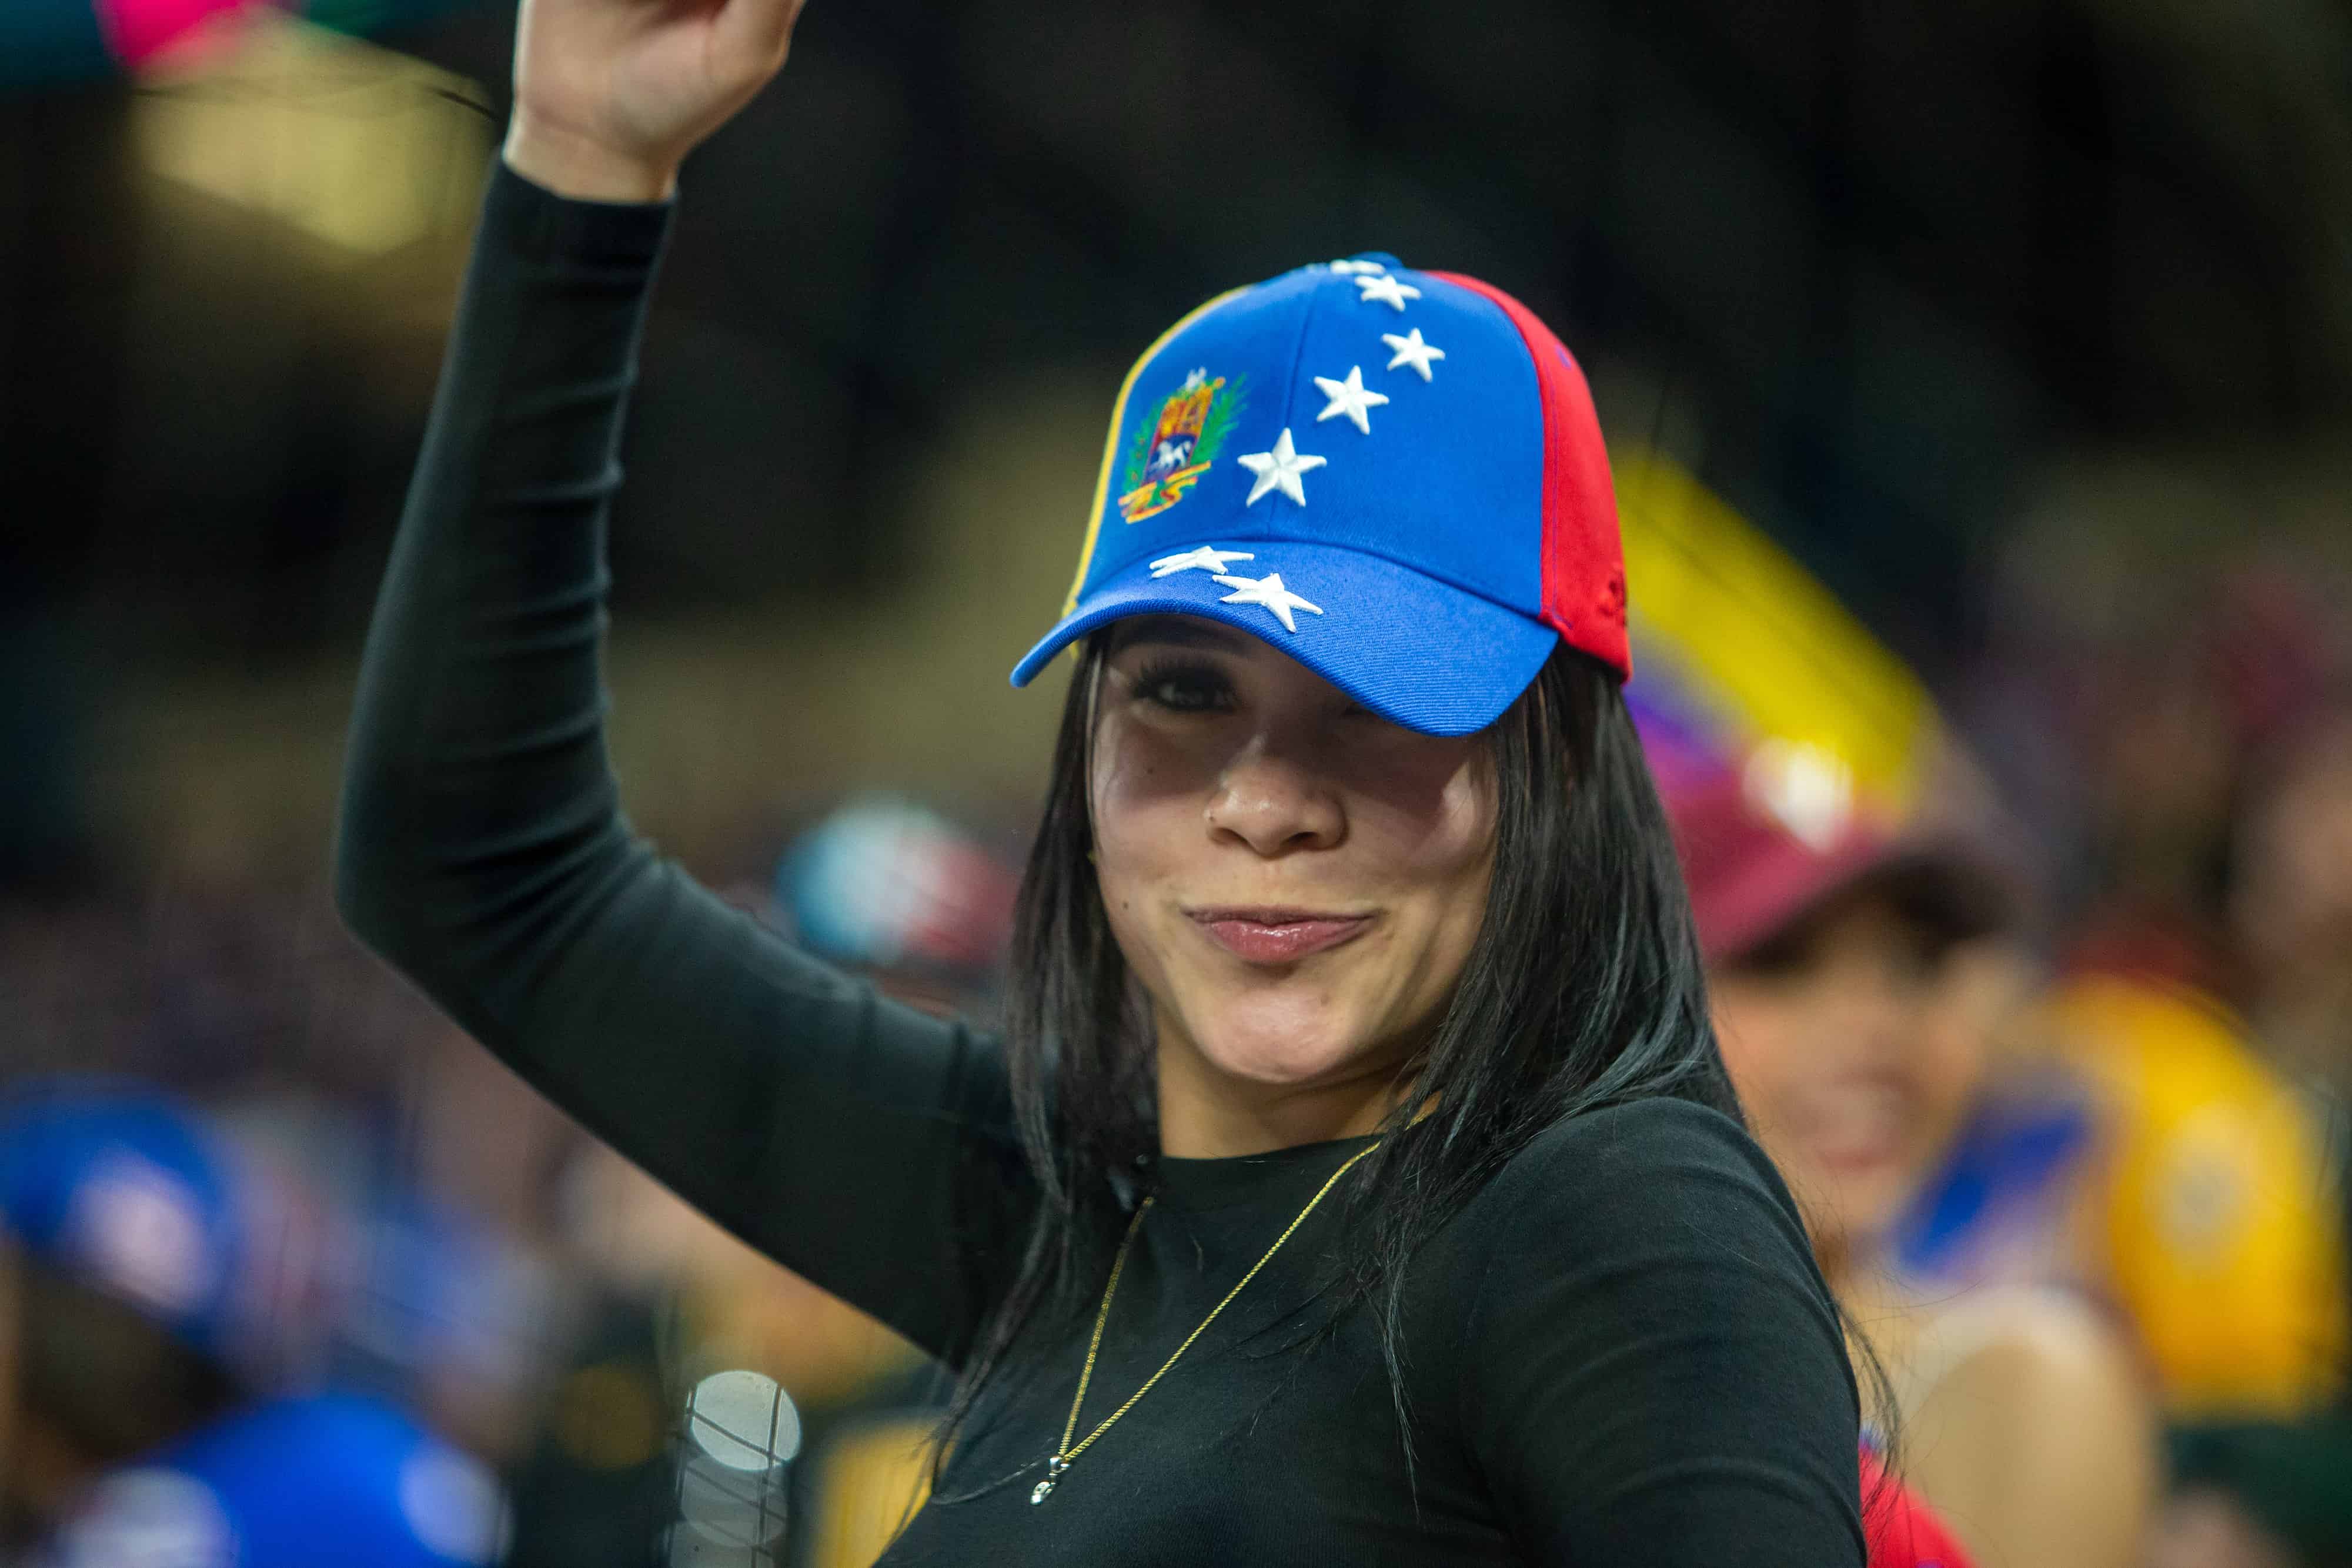 La fanaticada venezolana disfrutó una buena noche de béisbol en el Loan Depot Park de Miami.